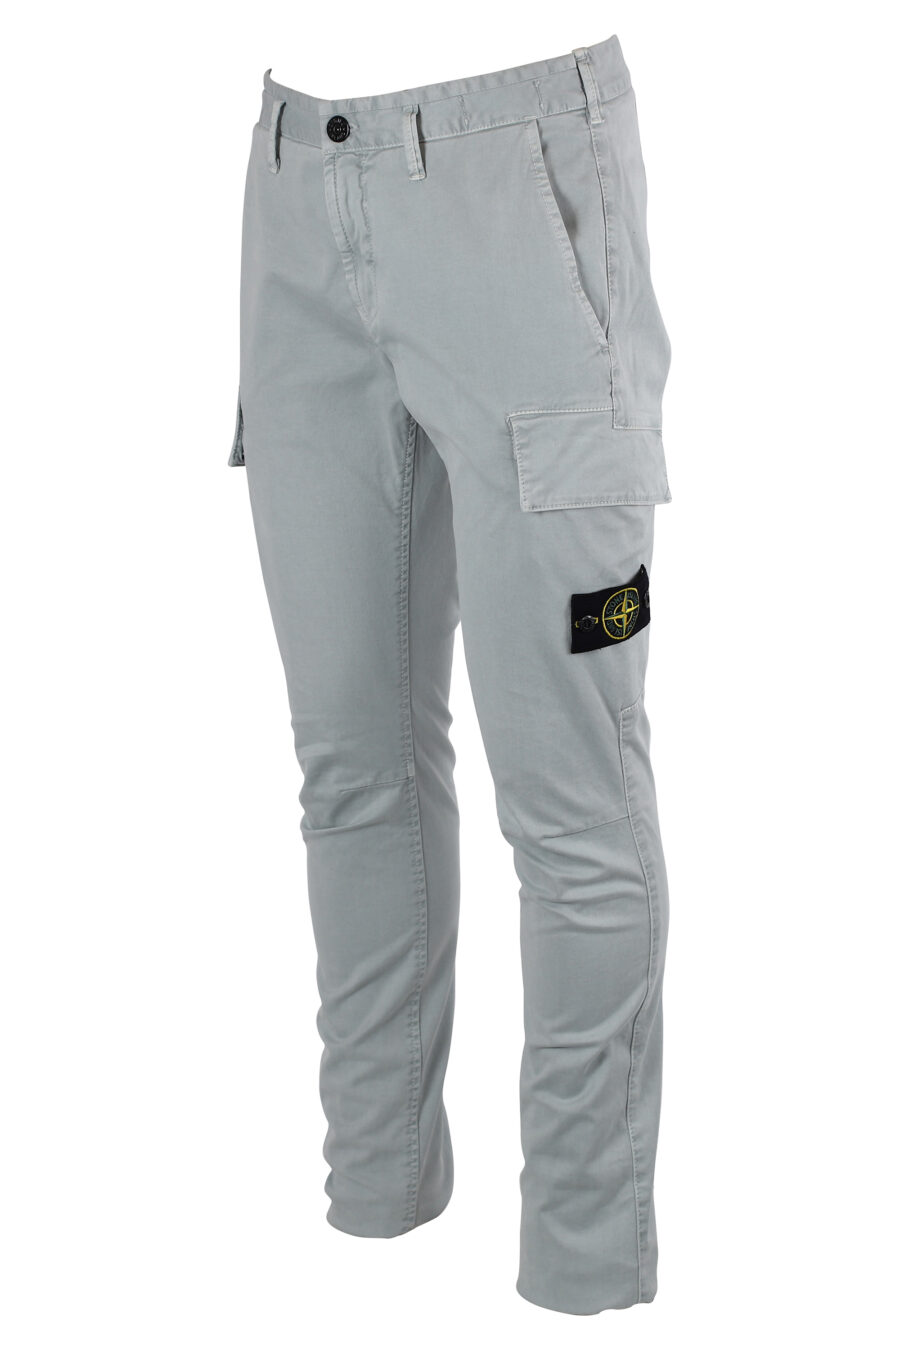 Pantalón gris claro con bolsillos y parche lateral - IMG 8334